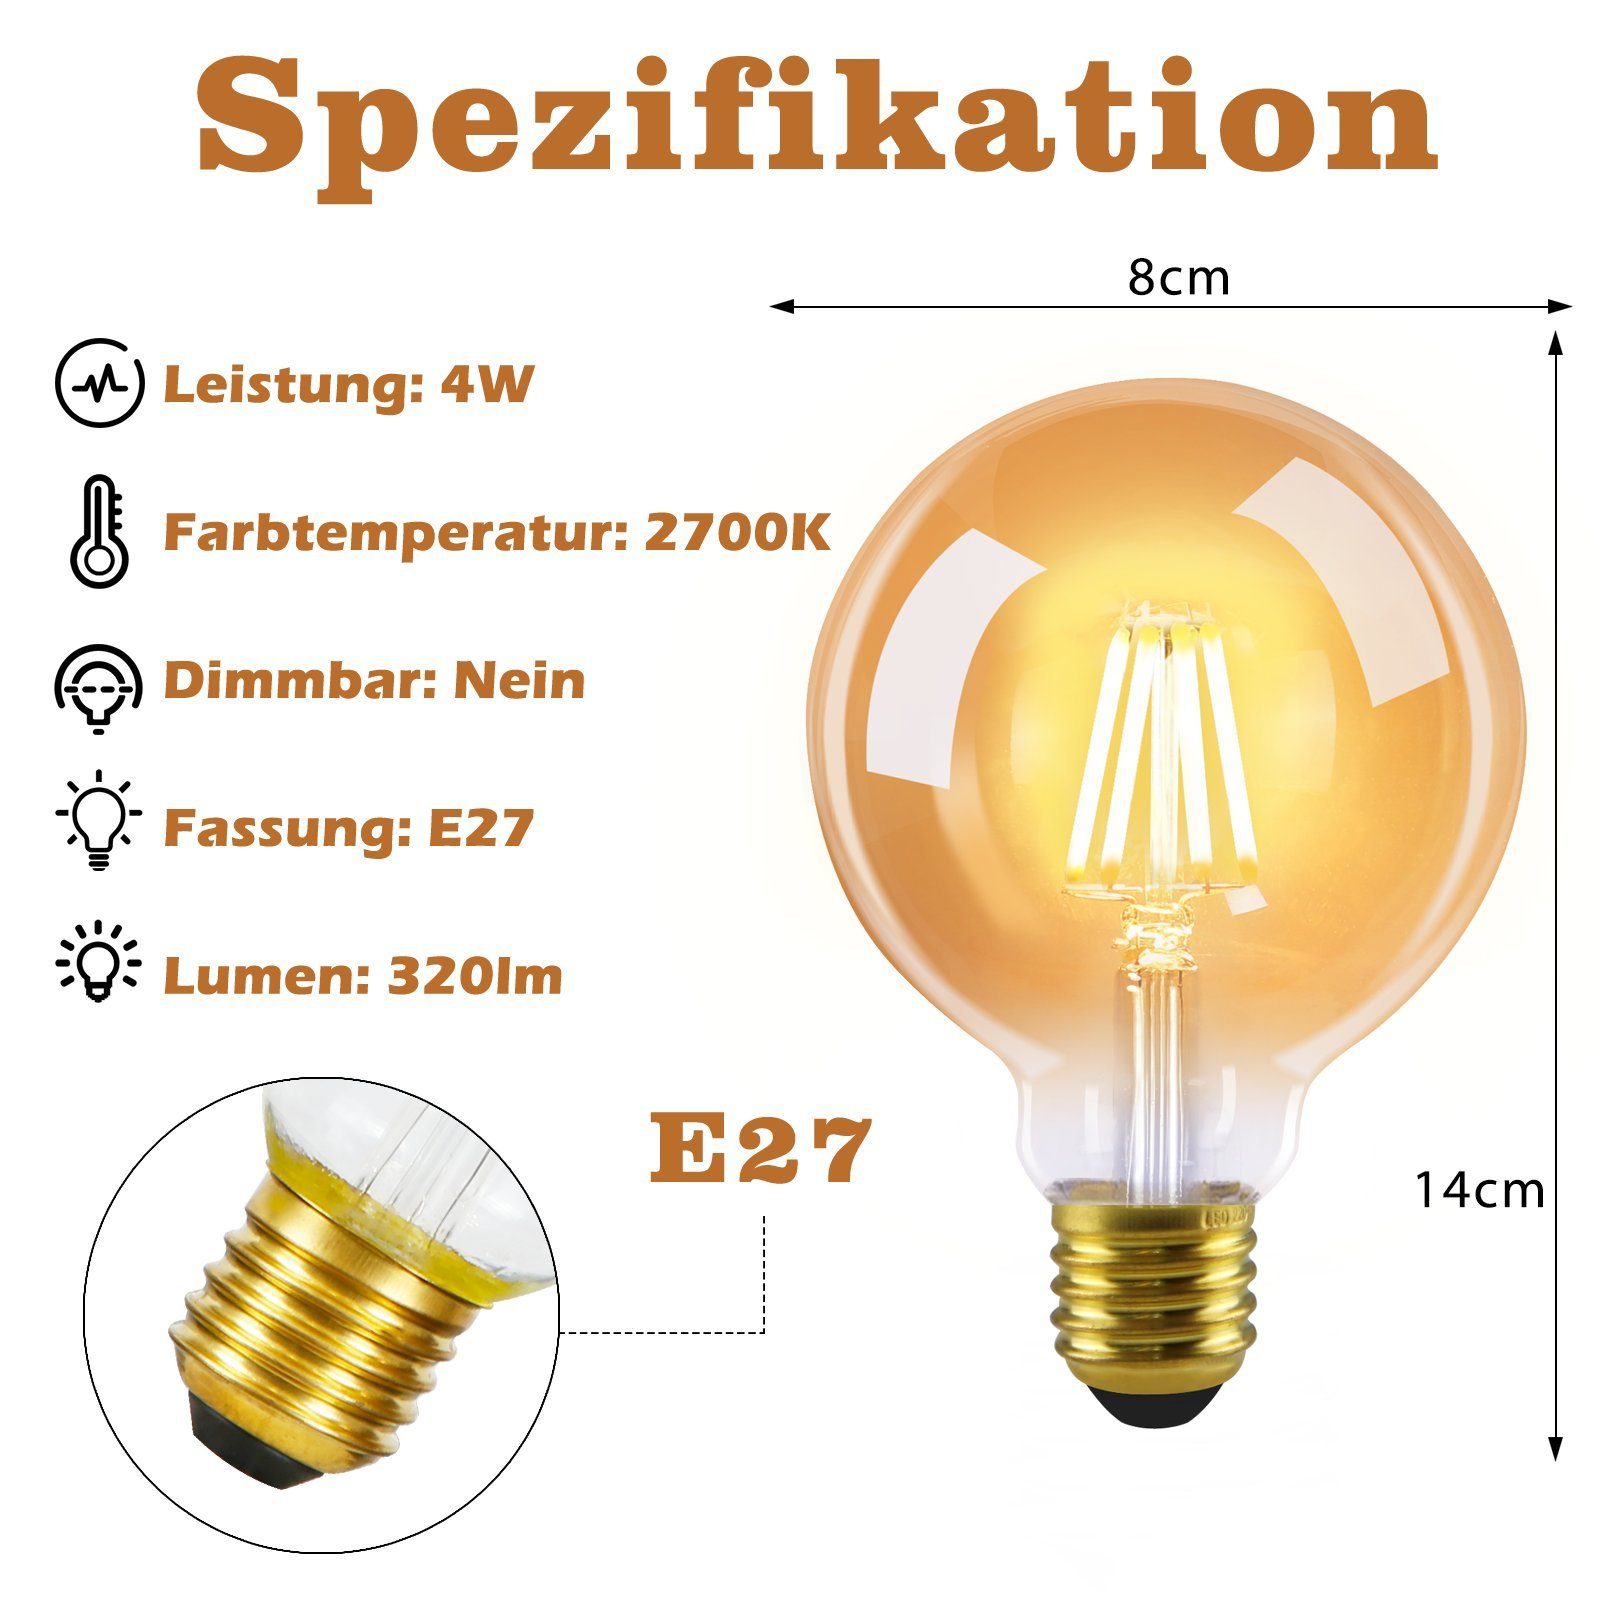 ZMH LED-Leuchtmittel LED 2700K, E27, Edison Birne Retro Energiesparlampe G80 warmweiß, 6 - Filament Glühbirne Glas St., Vintage